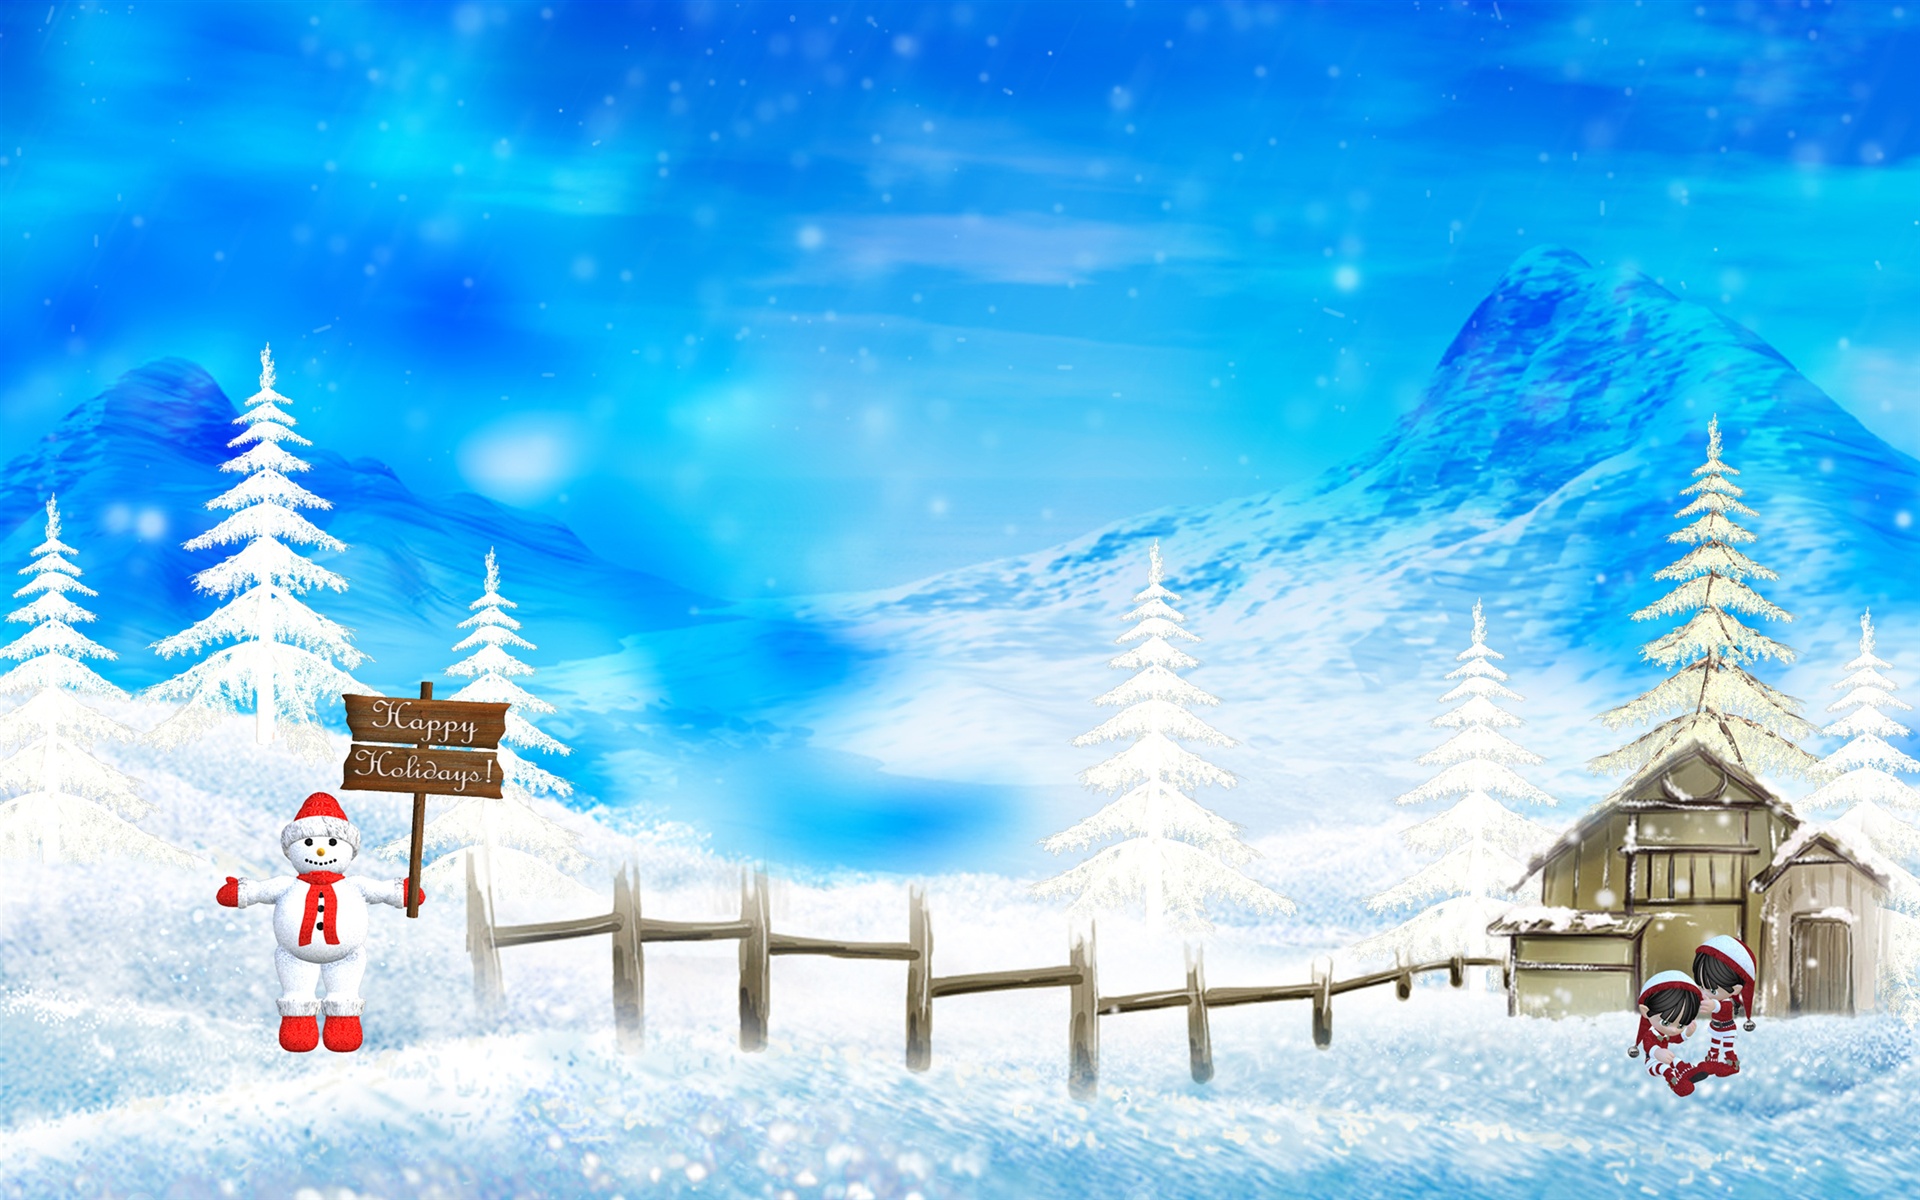 Merry Christmas tree free download wallpaper | PixelsTalk.Net